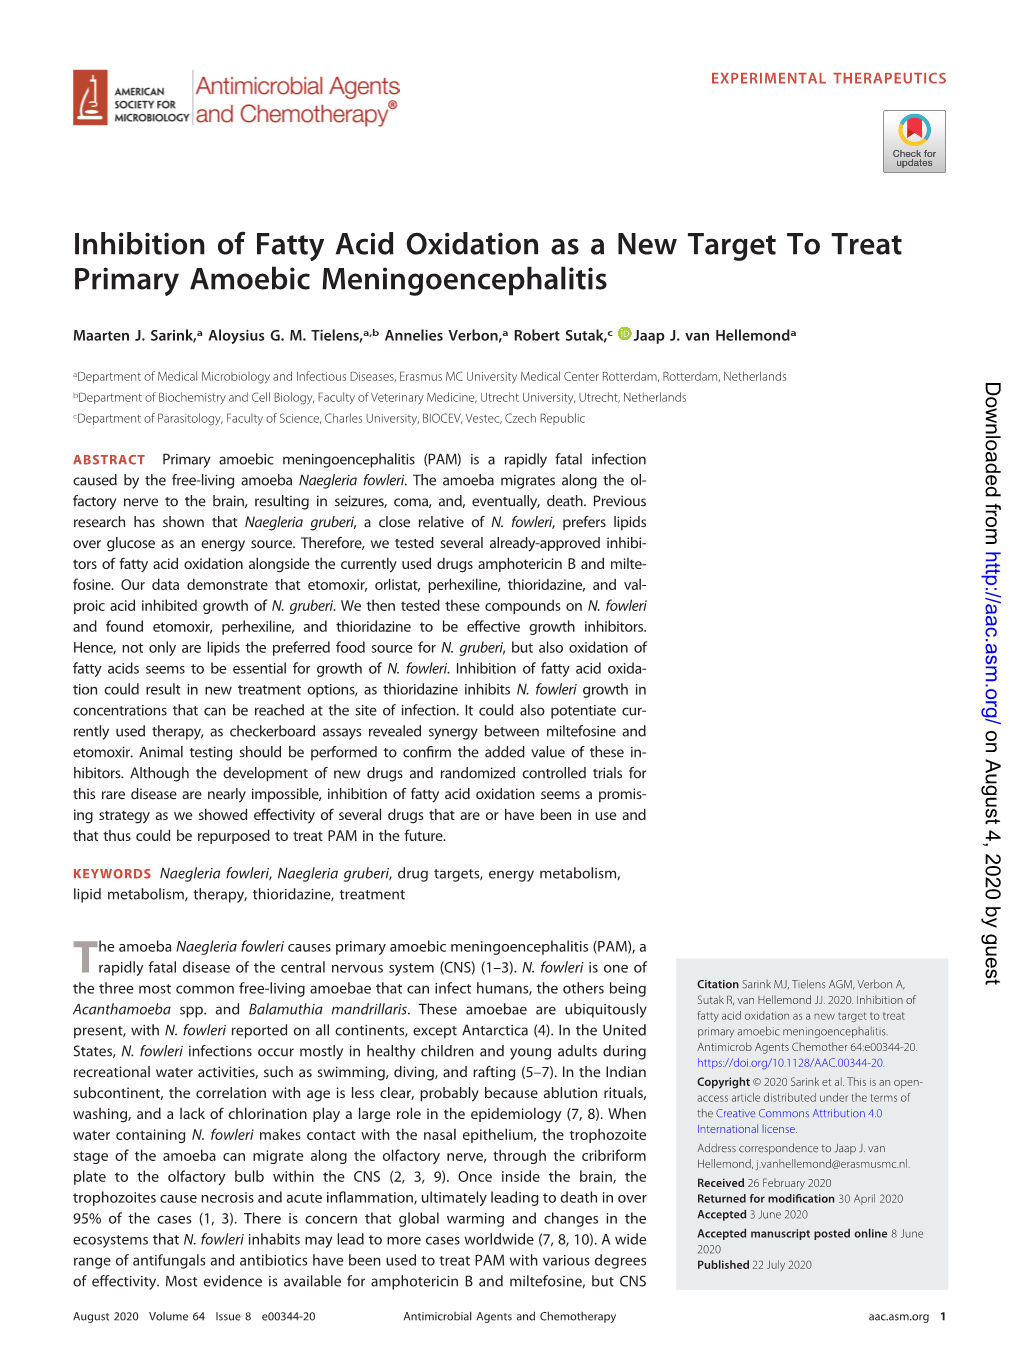 Inhibition of Fatty Acid Oxidation As a New Target to Treat Primary Amoebic Meningoencephalitis